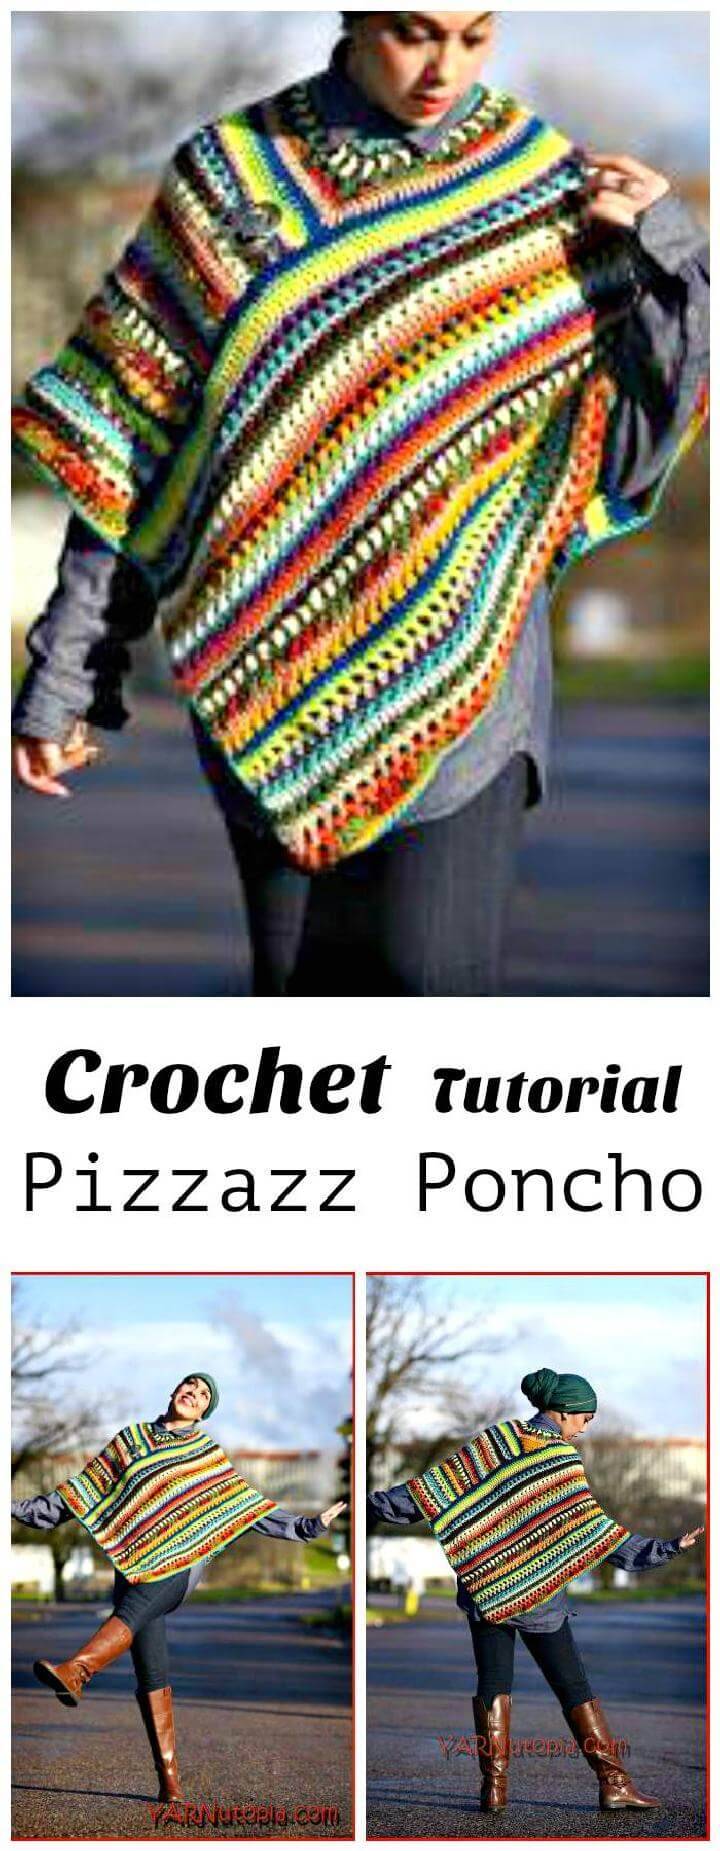 Crochet Tutorial The Pizzazz Poncho